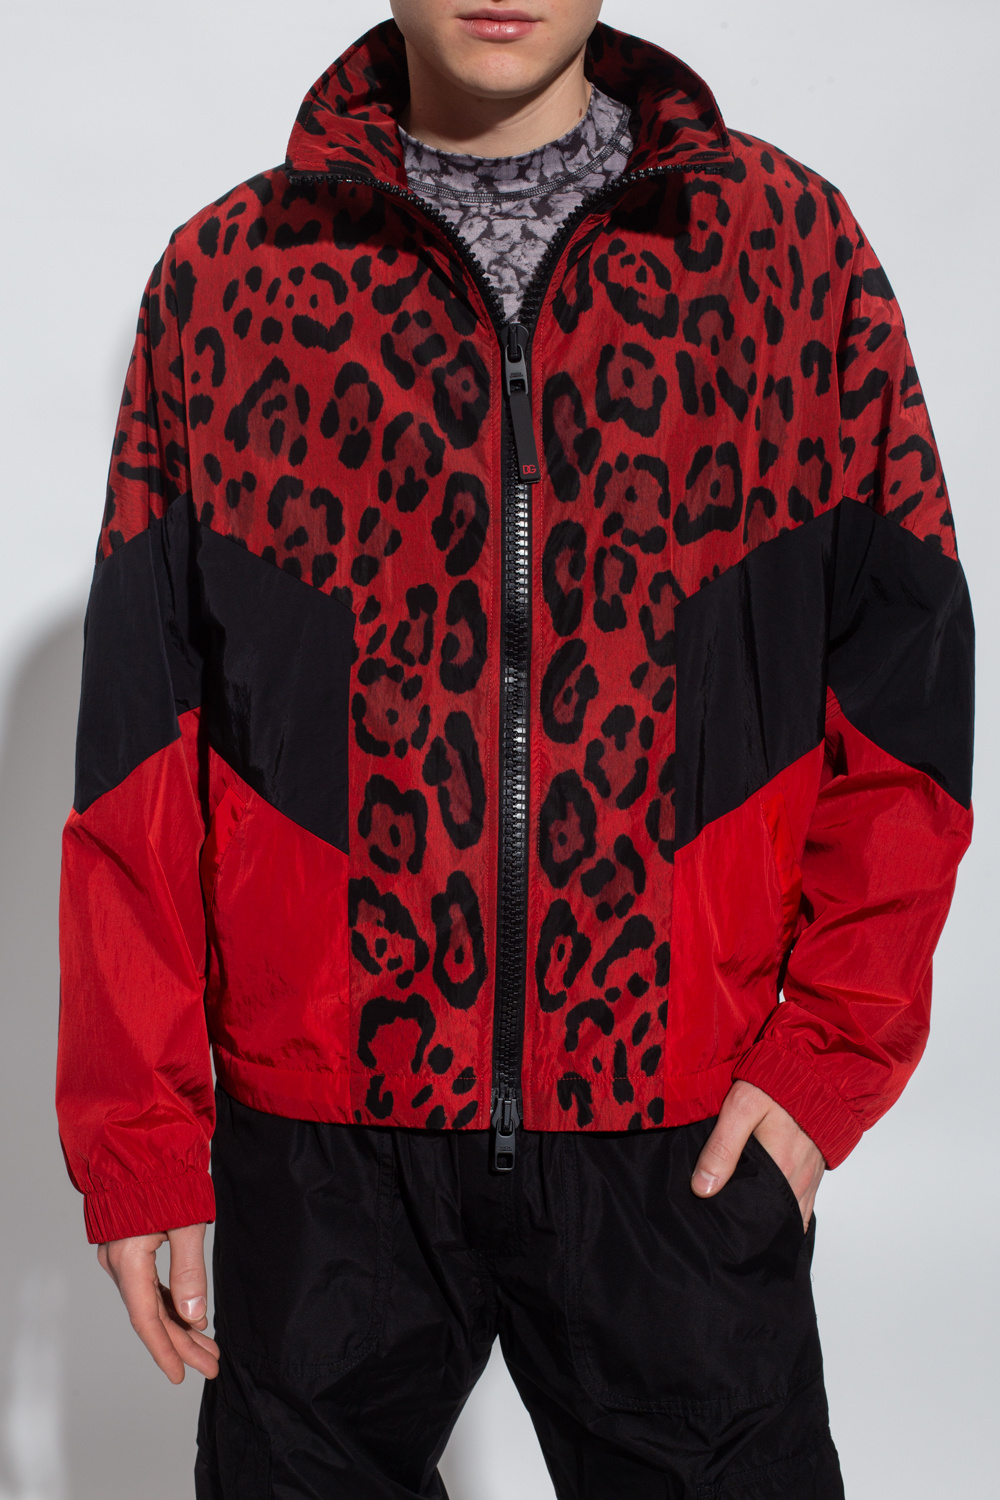 dolce gabbana jungle leopard print foulard item Nylon jacket with animal motif